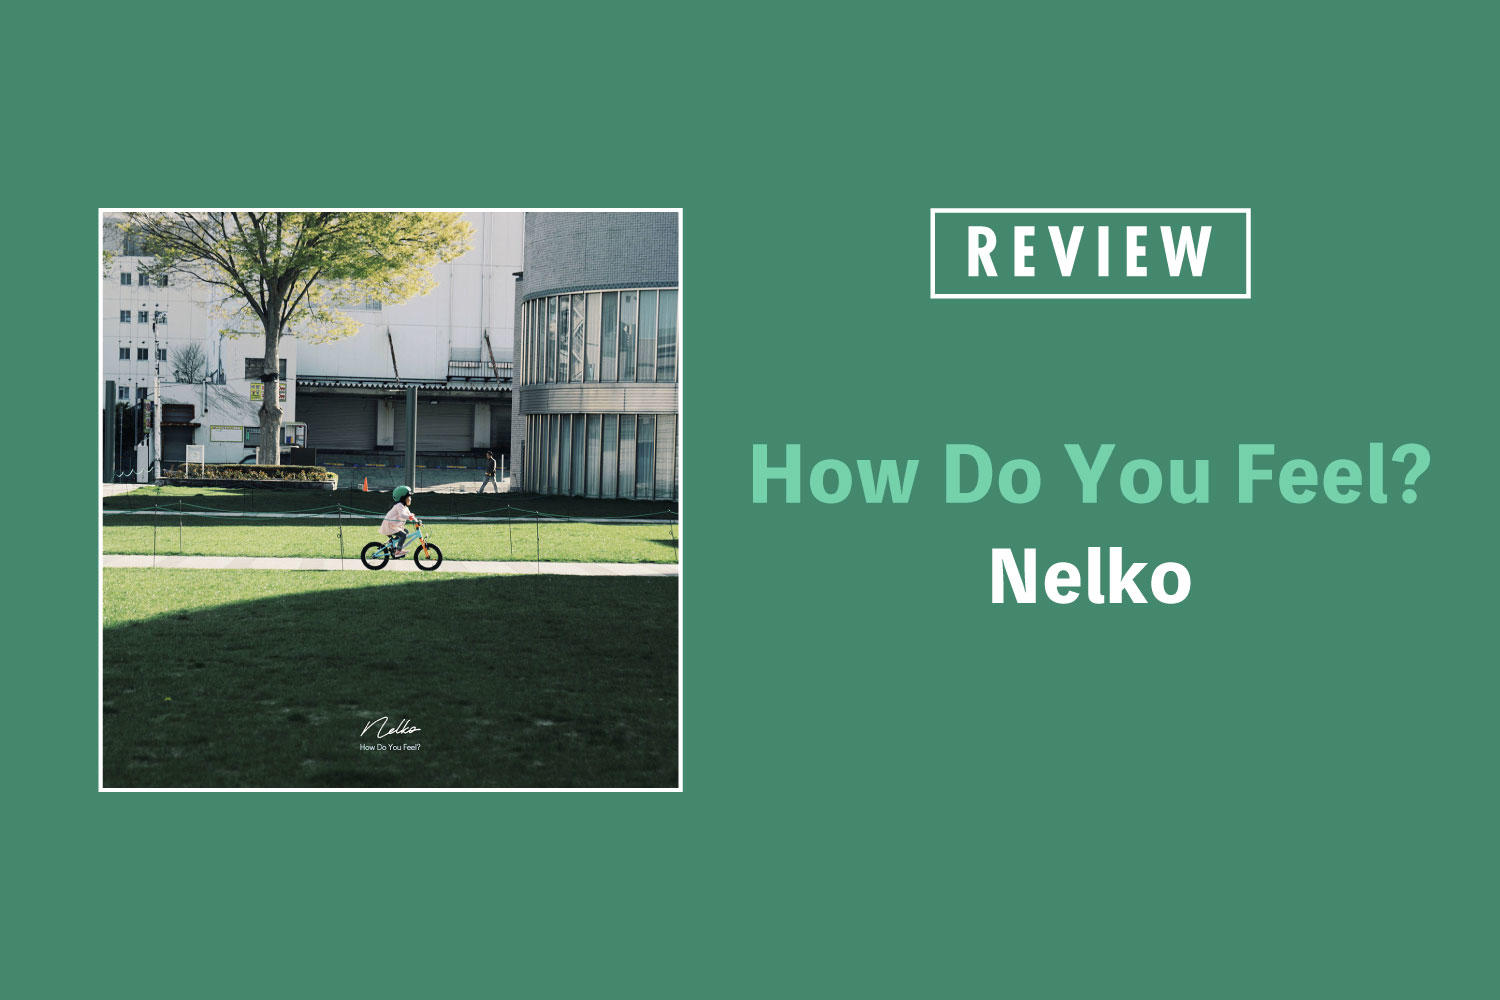 Nelko「How Do You Feel?」──変わり果てた世界で肩の力を抜くためのグッドミュージック